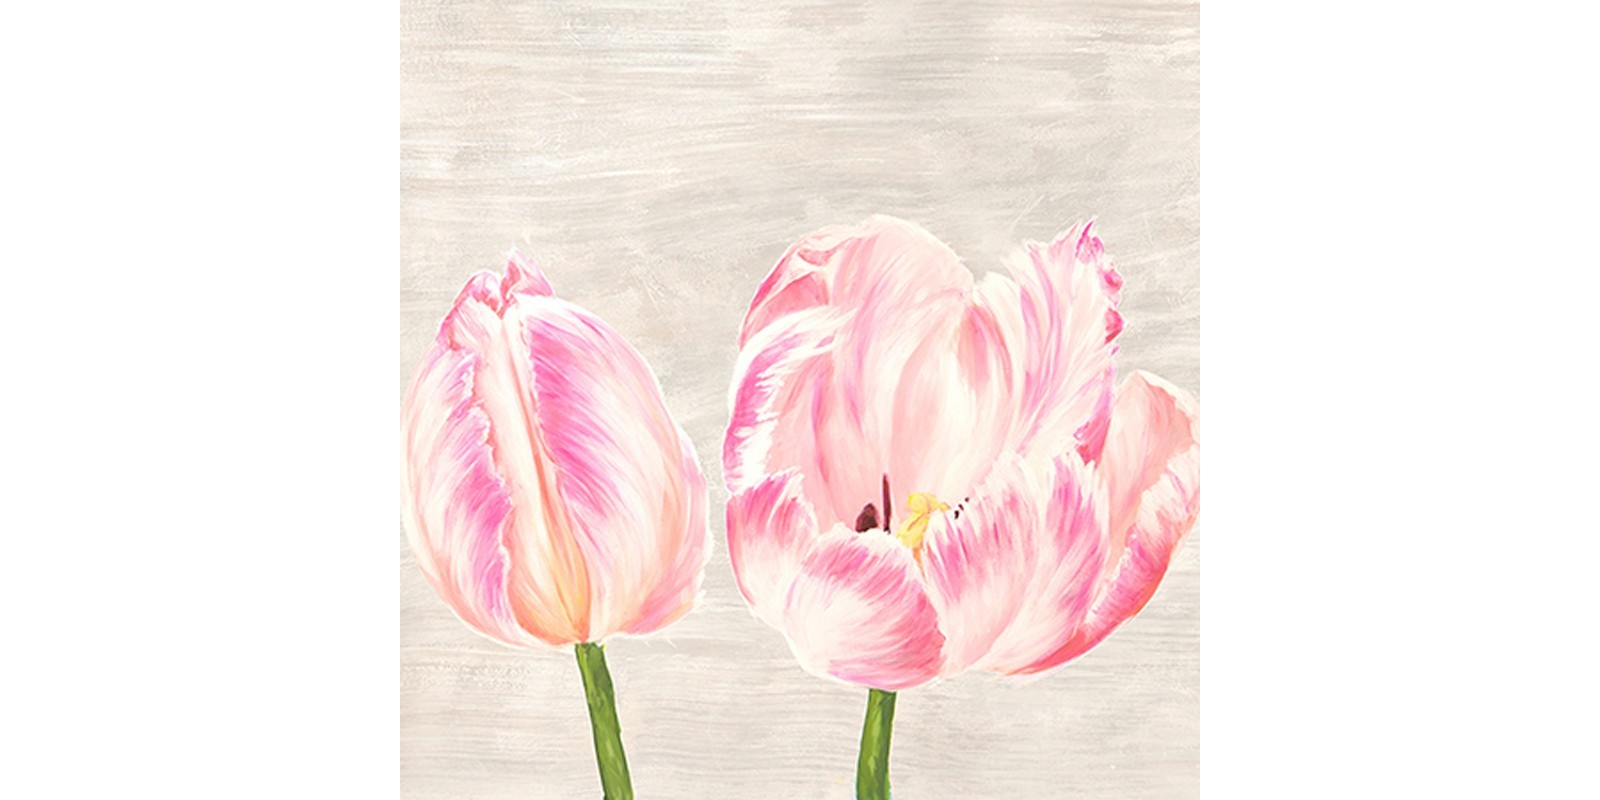 Jenny Thomlinson - Classic Tulips I